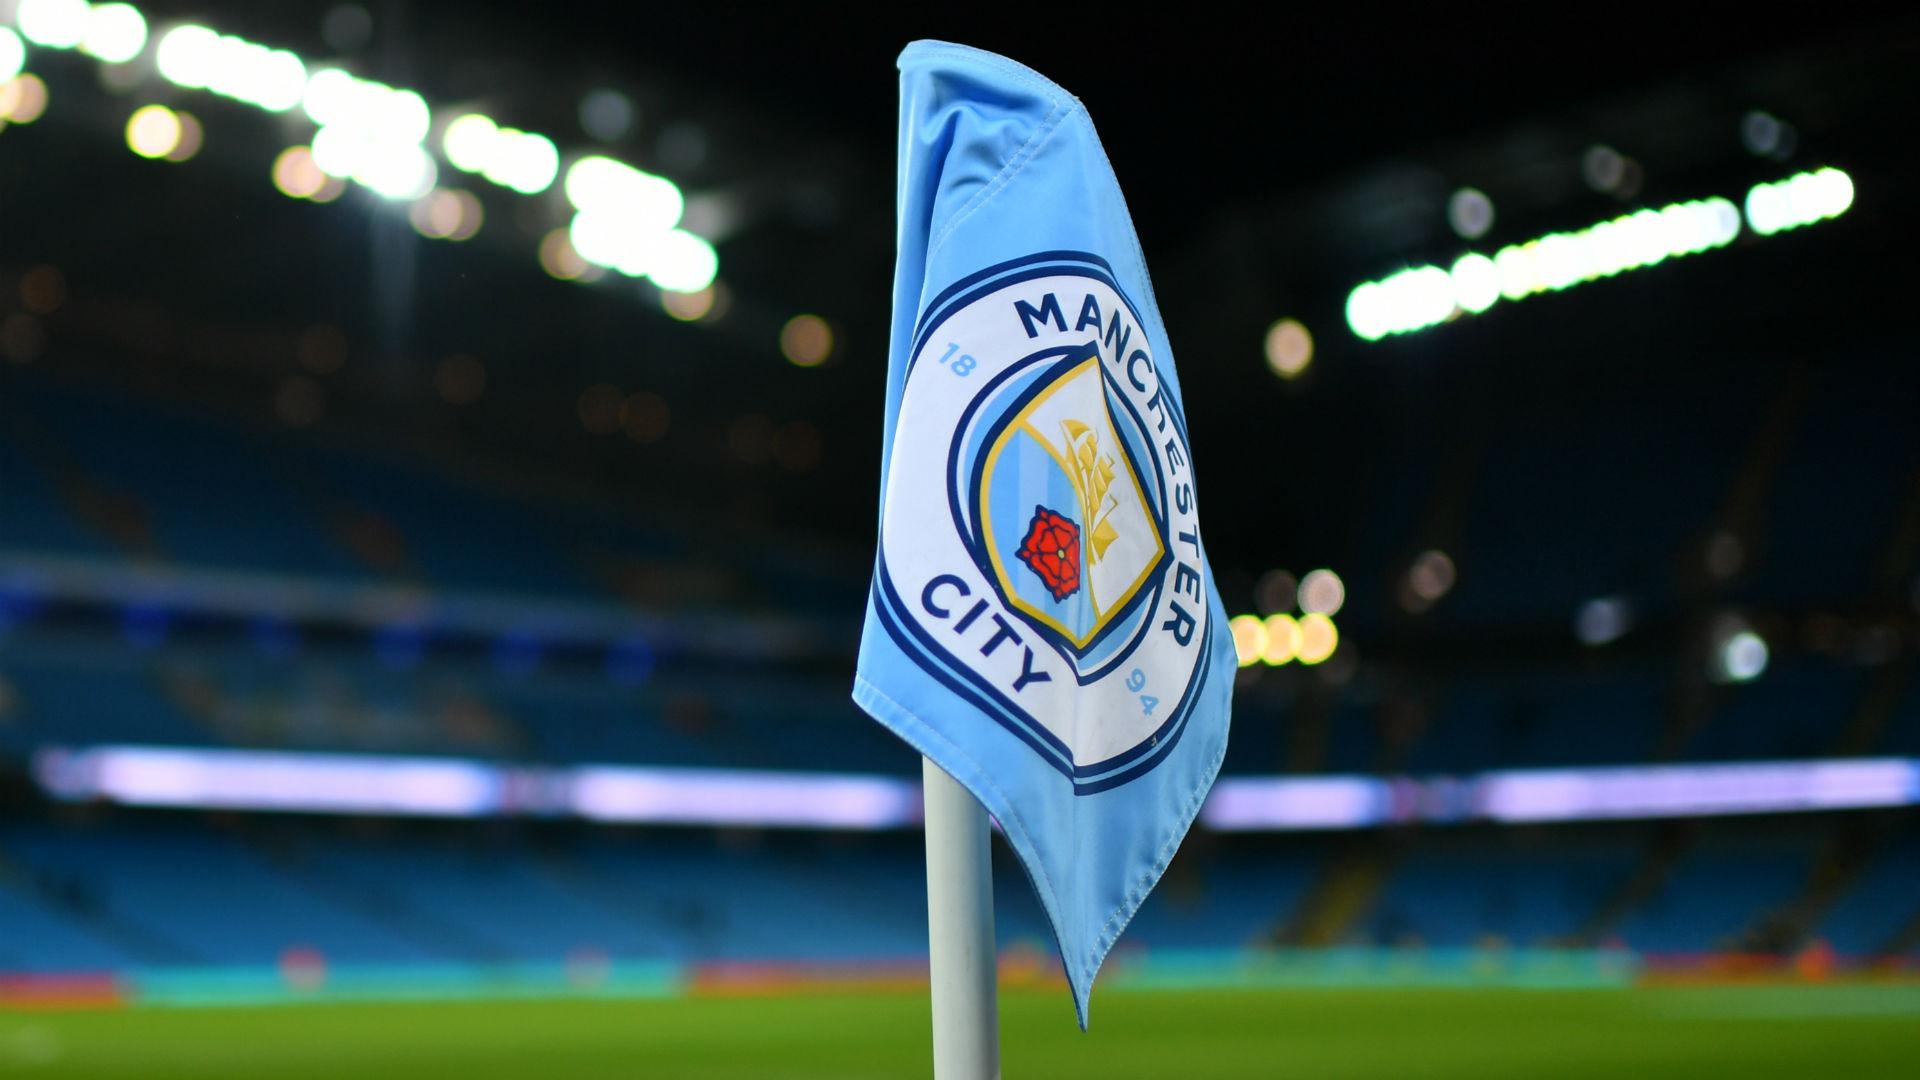 Manchester City Face No Action Over 'allez' Chant